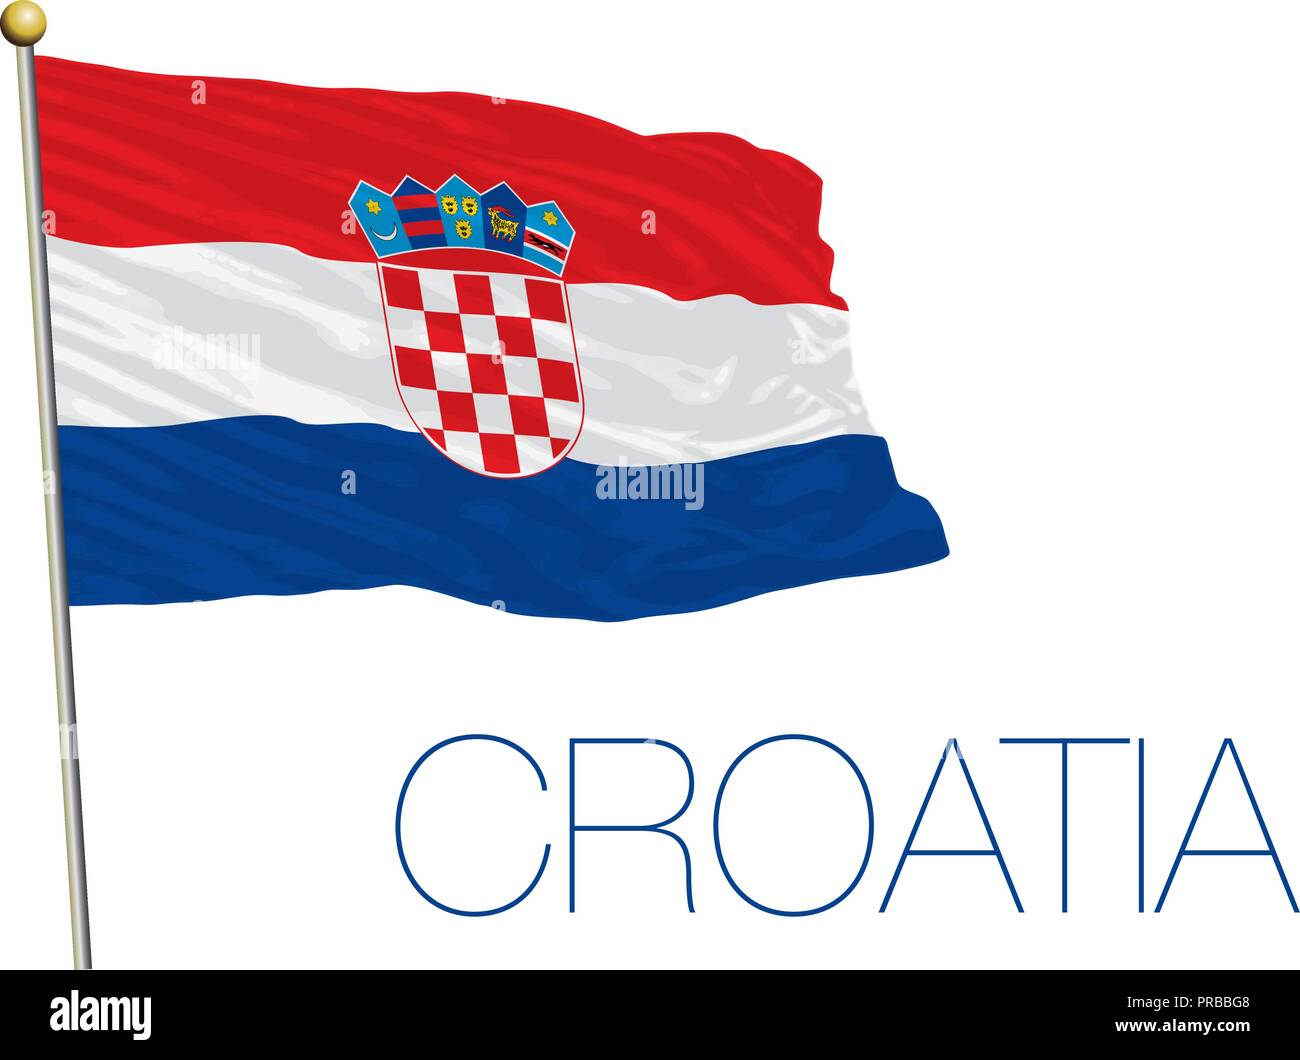 Croatia flag, vector illustration Stock Vector